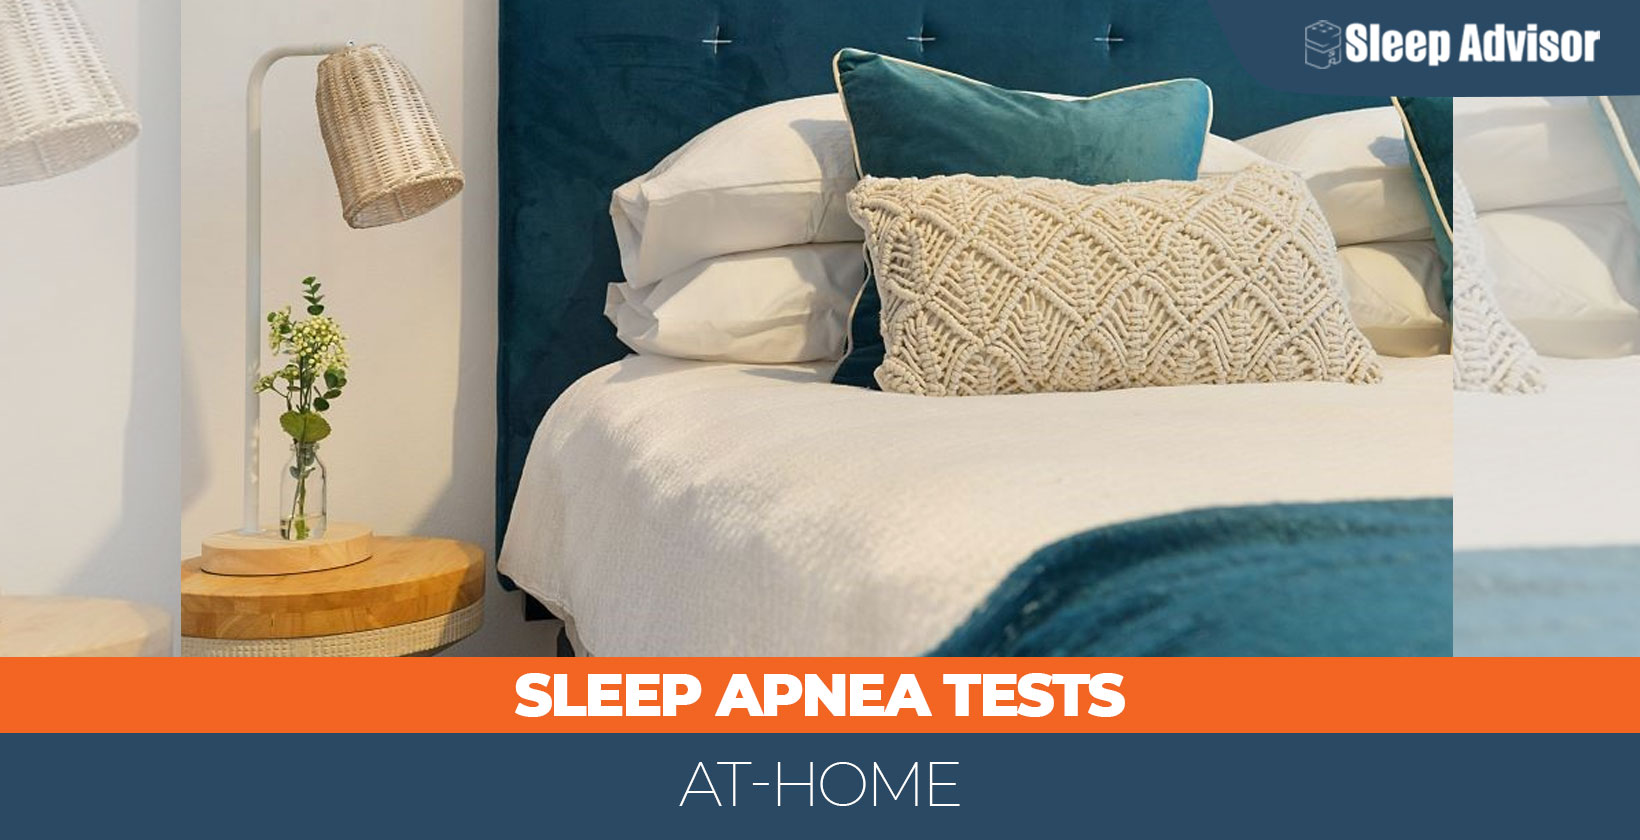 At-Home Sleep Apnea Tests